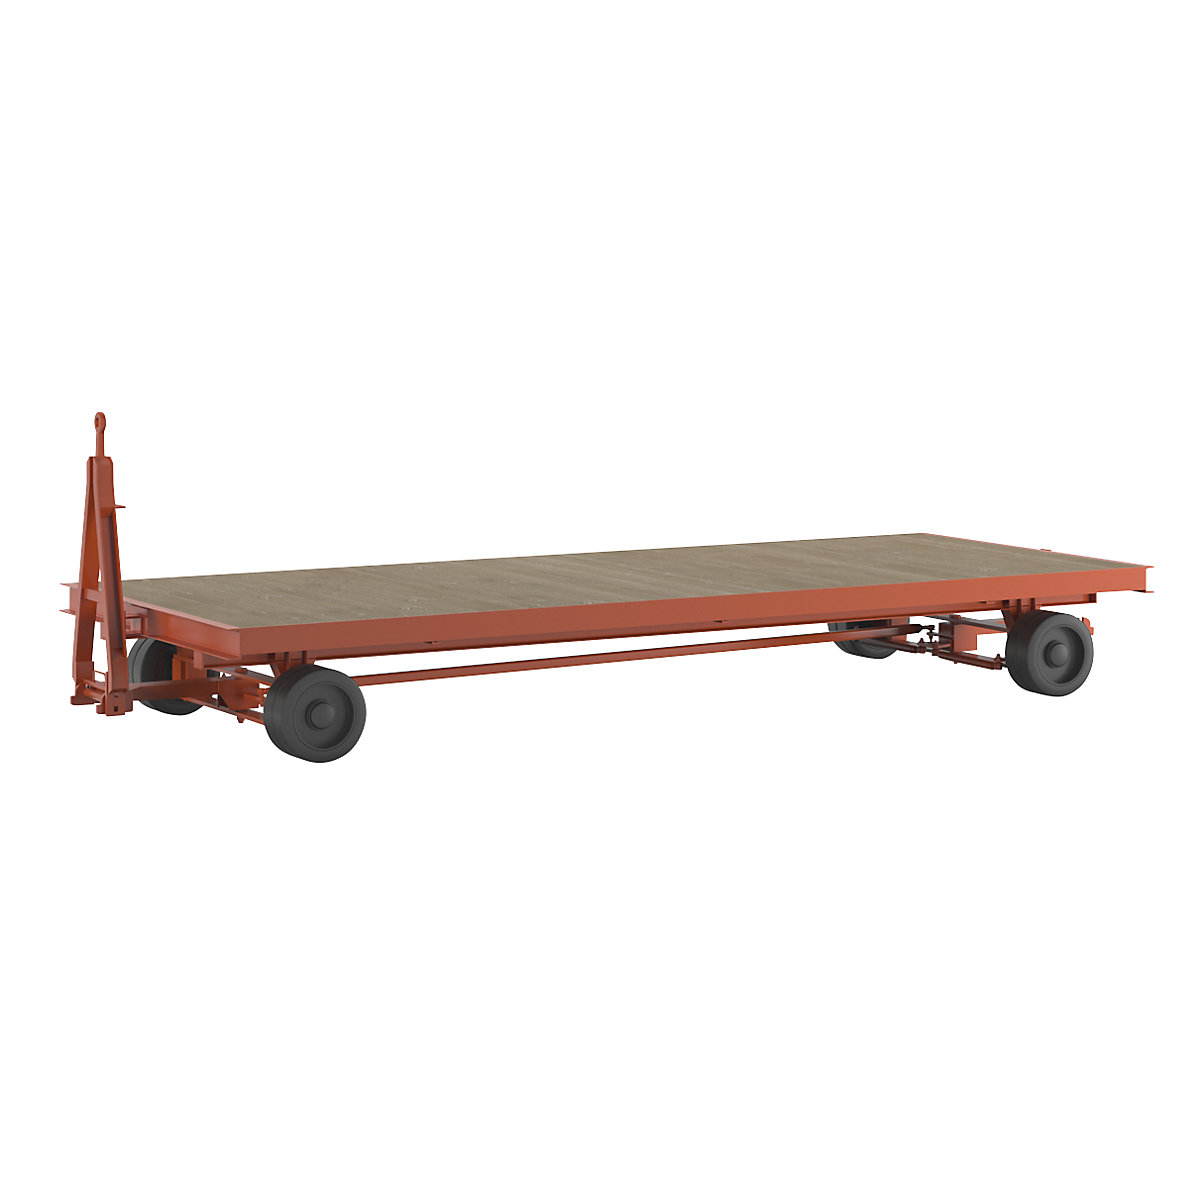 Heavy goods trailer, 10 t, 4-wheel linked ackerman steering, platform 5.0 x 2.0 m-1